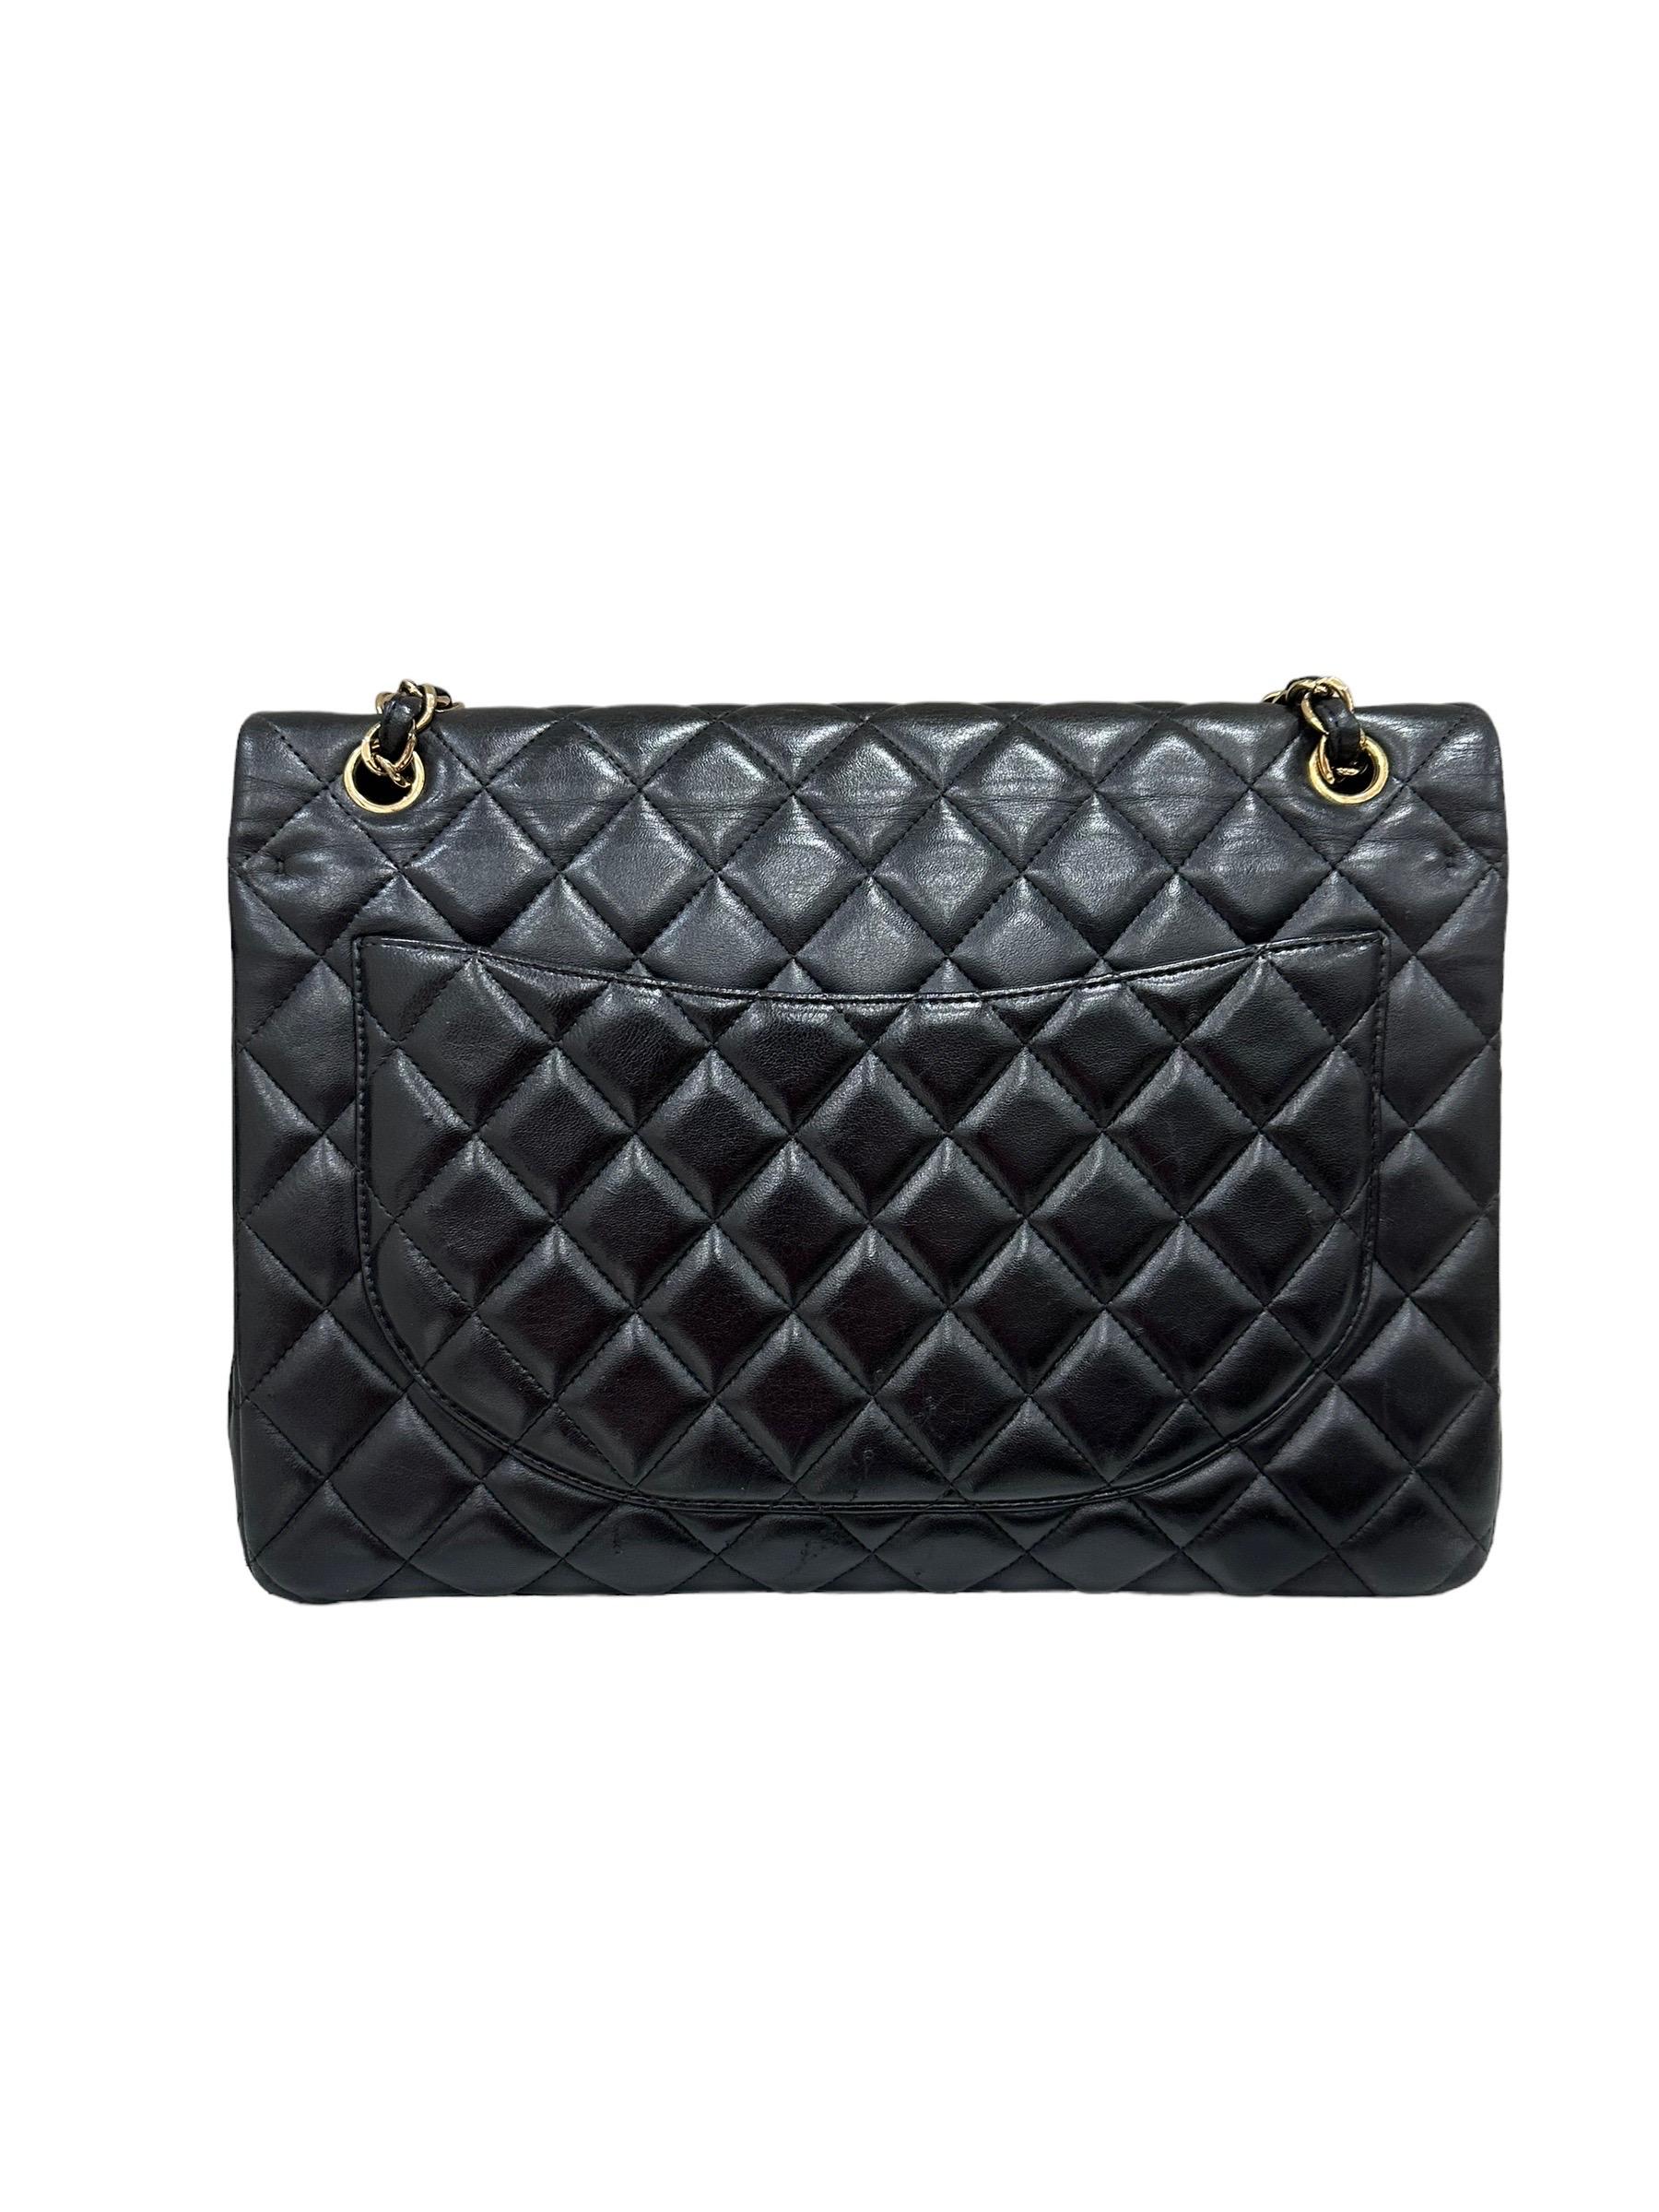 2011 Chanel Timeless Maxi Jumbo Black Leather Top Shoulder Bag 3